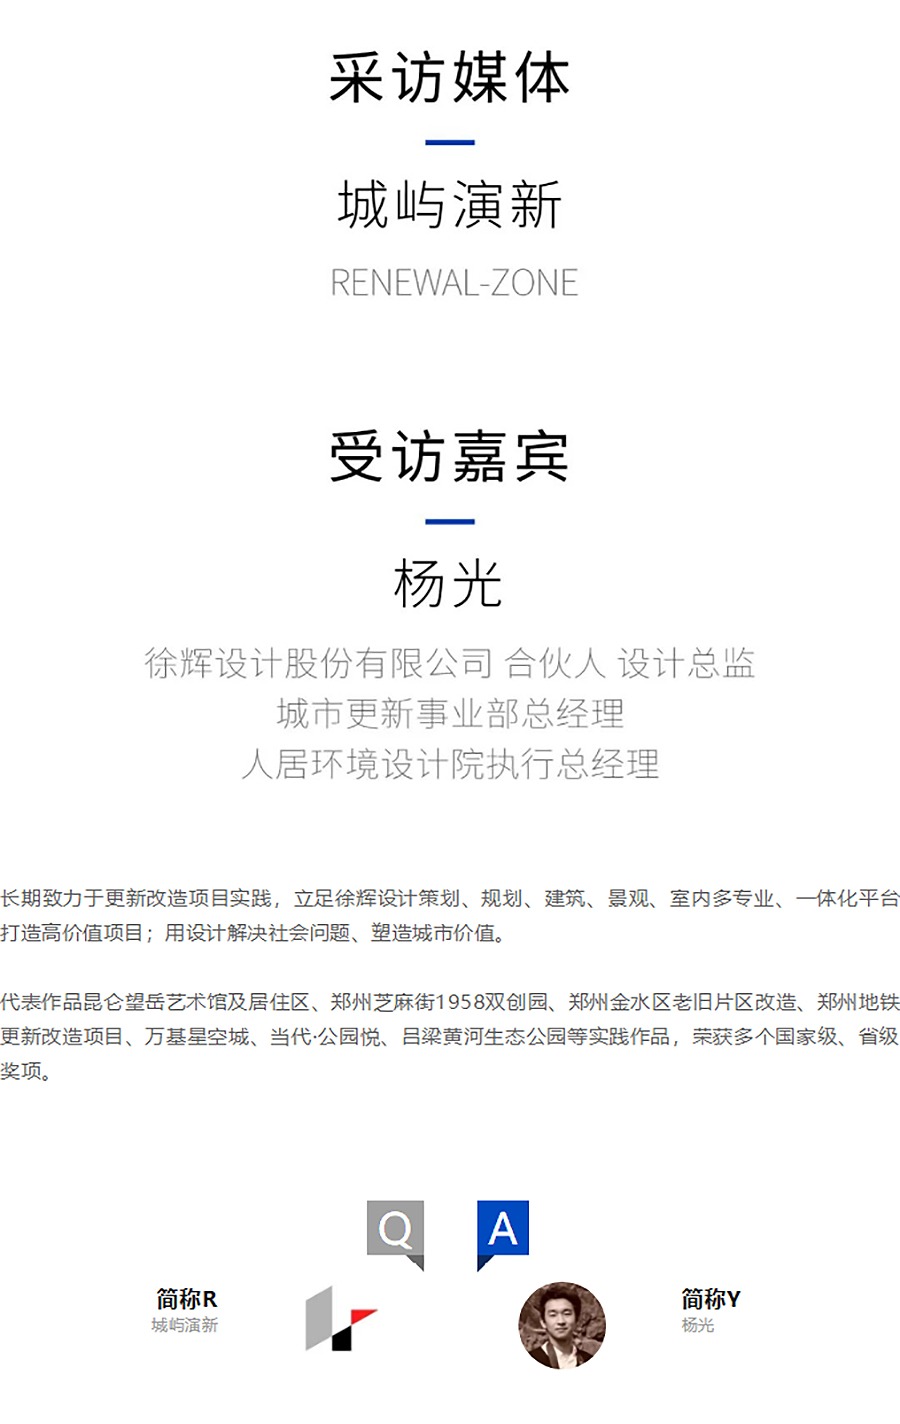 Renewal-Zone：专访徐辉设计-杨光︱解决问题-塑造价值：建构城市空间的进化论-1_03.jpg